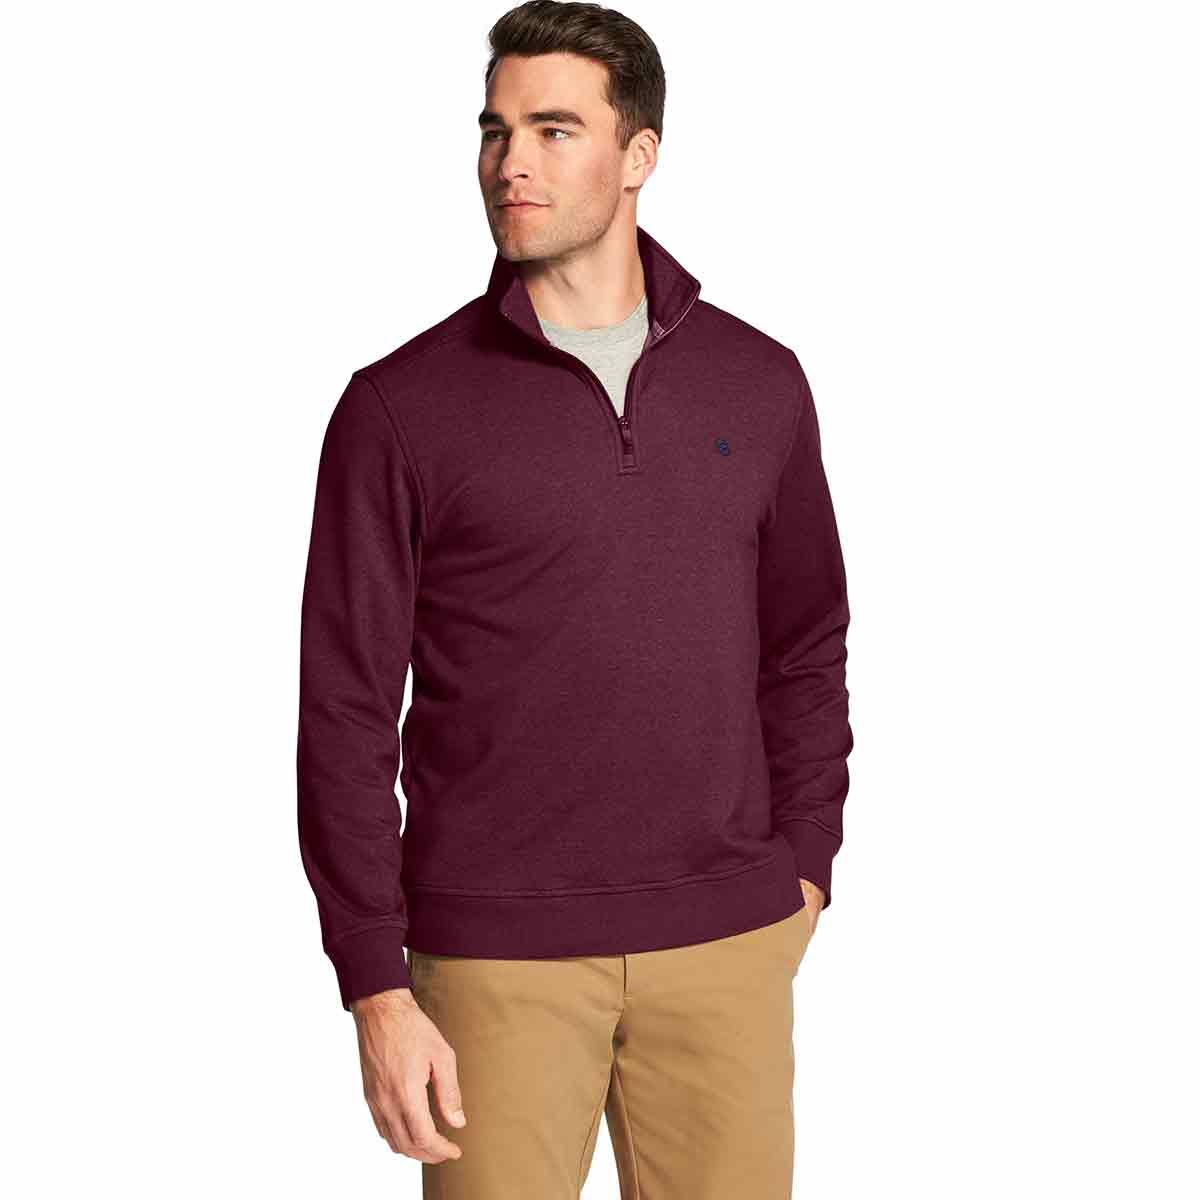 Izod Men's Advantage Performance Stretch Quarter Zip Fleece Pullover - Purple, M